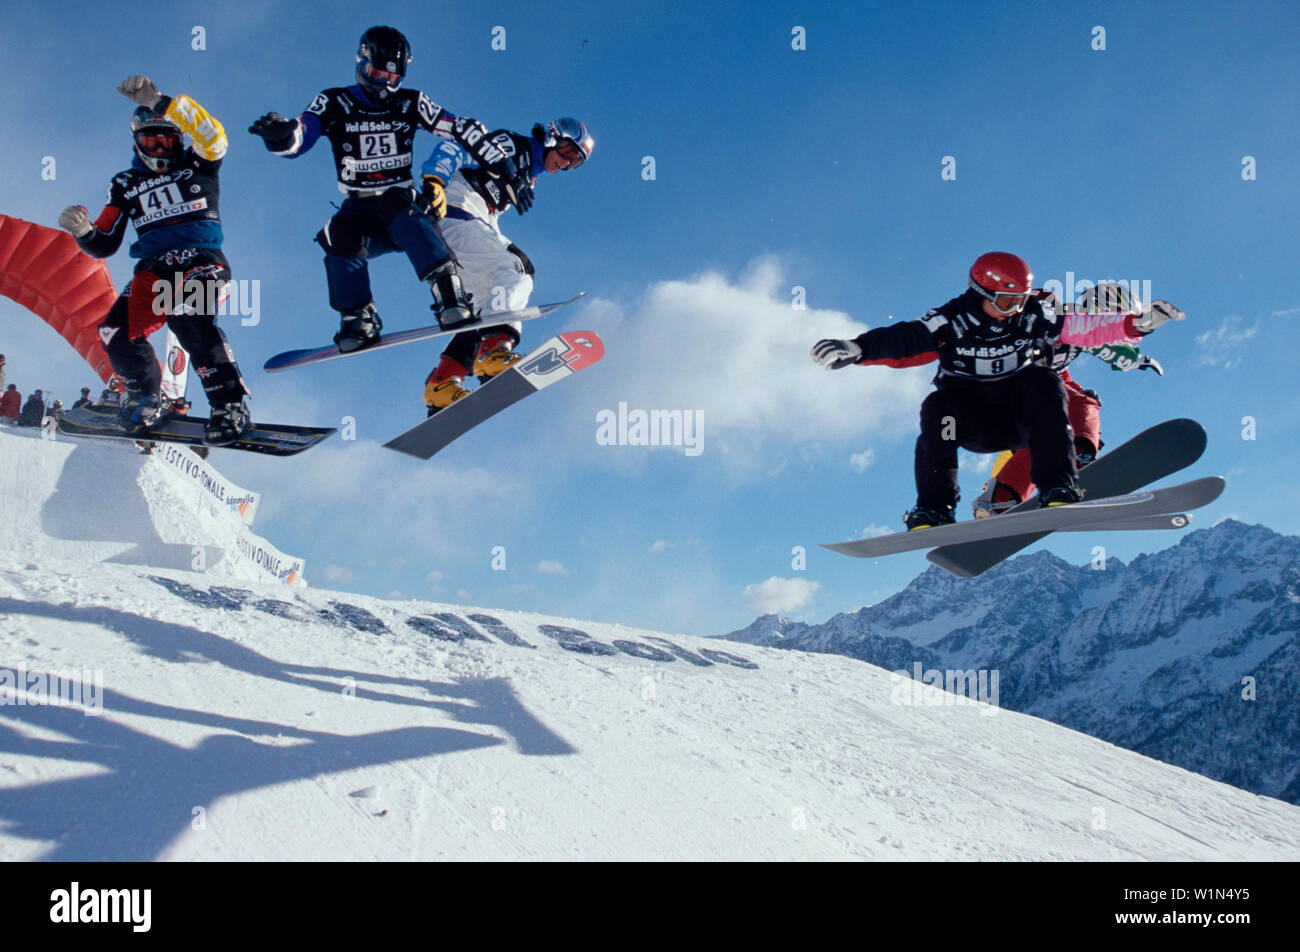 Snowboard, Boardercross, Val di Sole, Italien Foto stock - Alamy